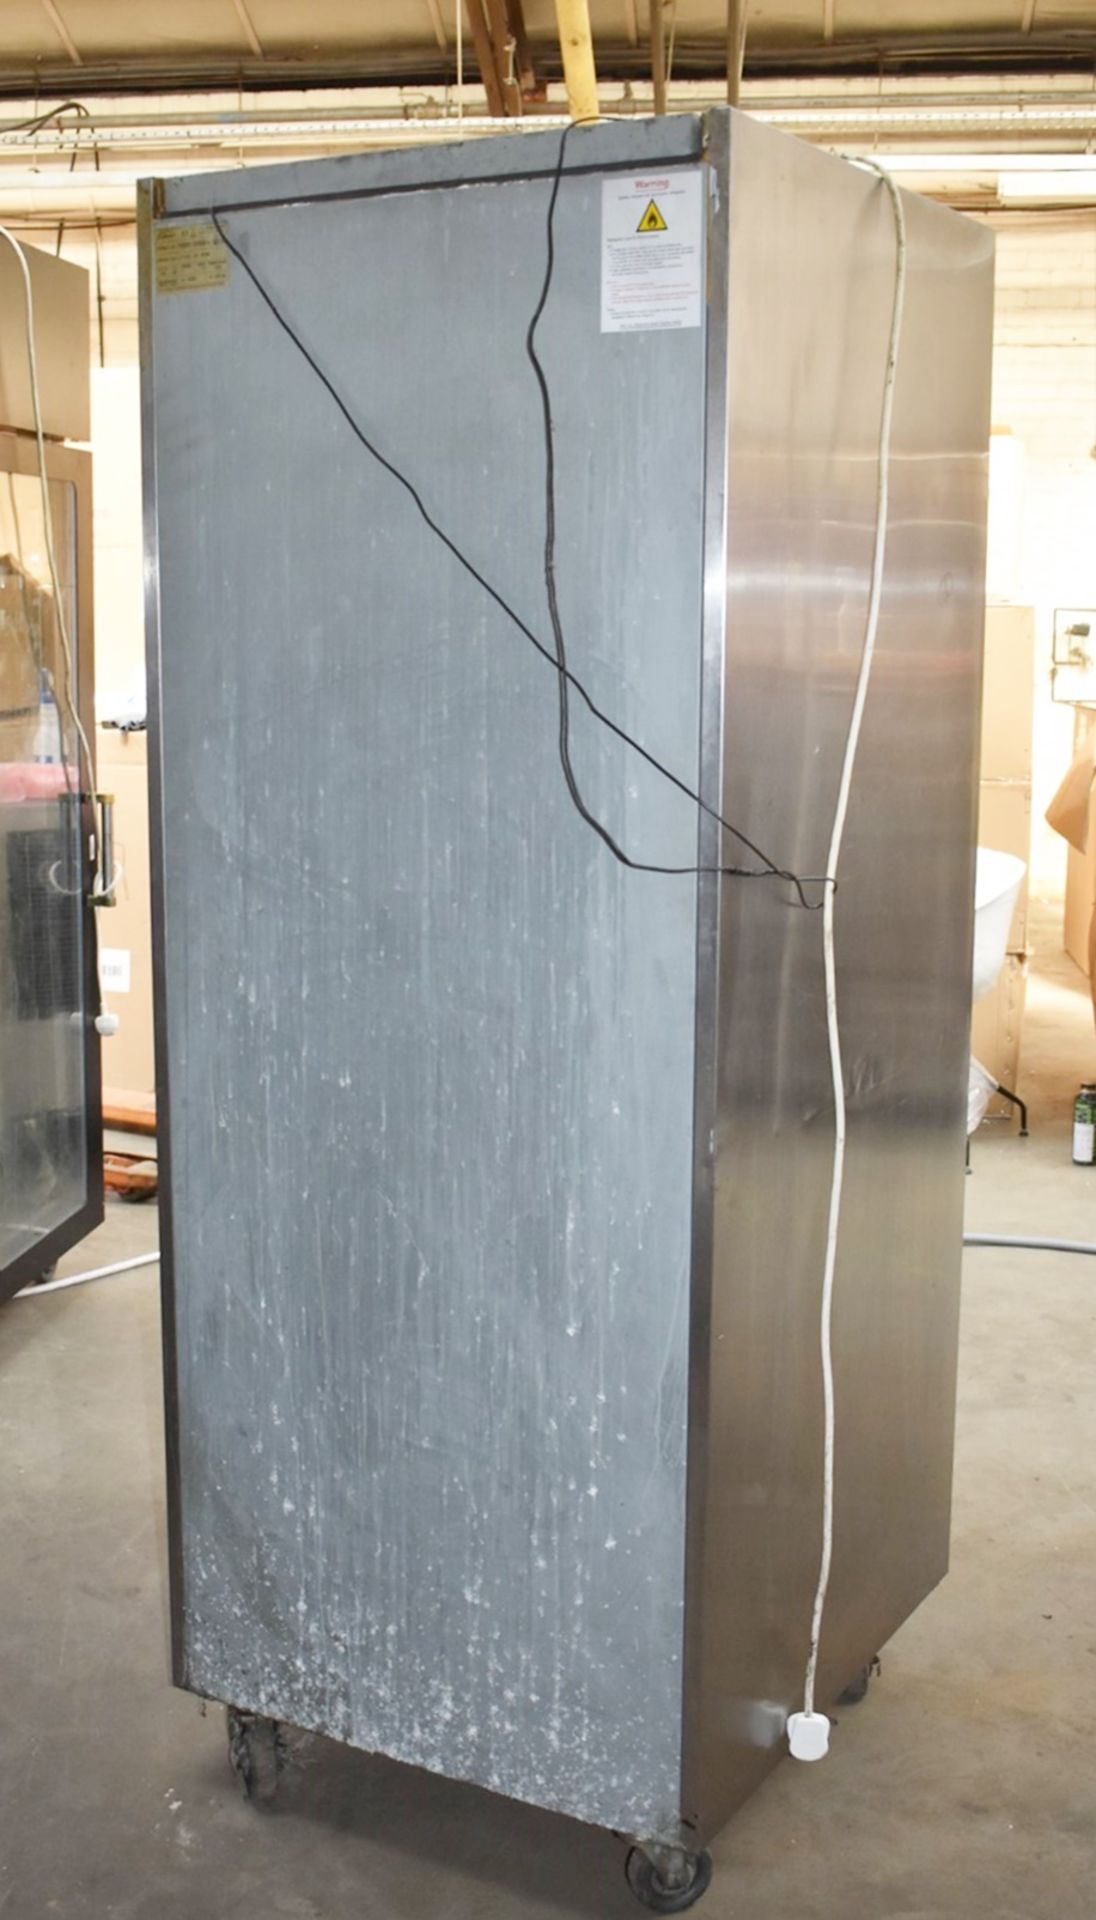 1 x Williams Jade Upright Single Door Refrigerator Stainless Steel Exterior & Internal Bakery Trays - Image 6 of 8